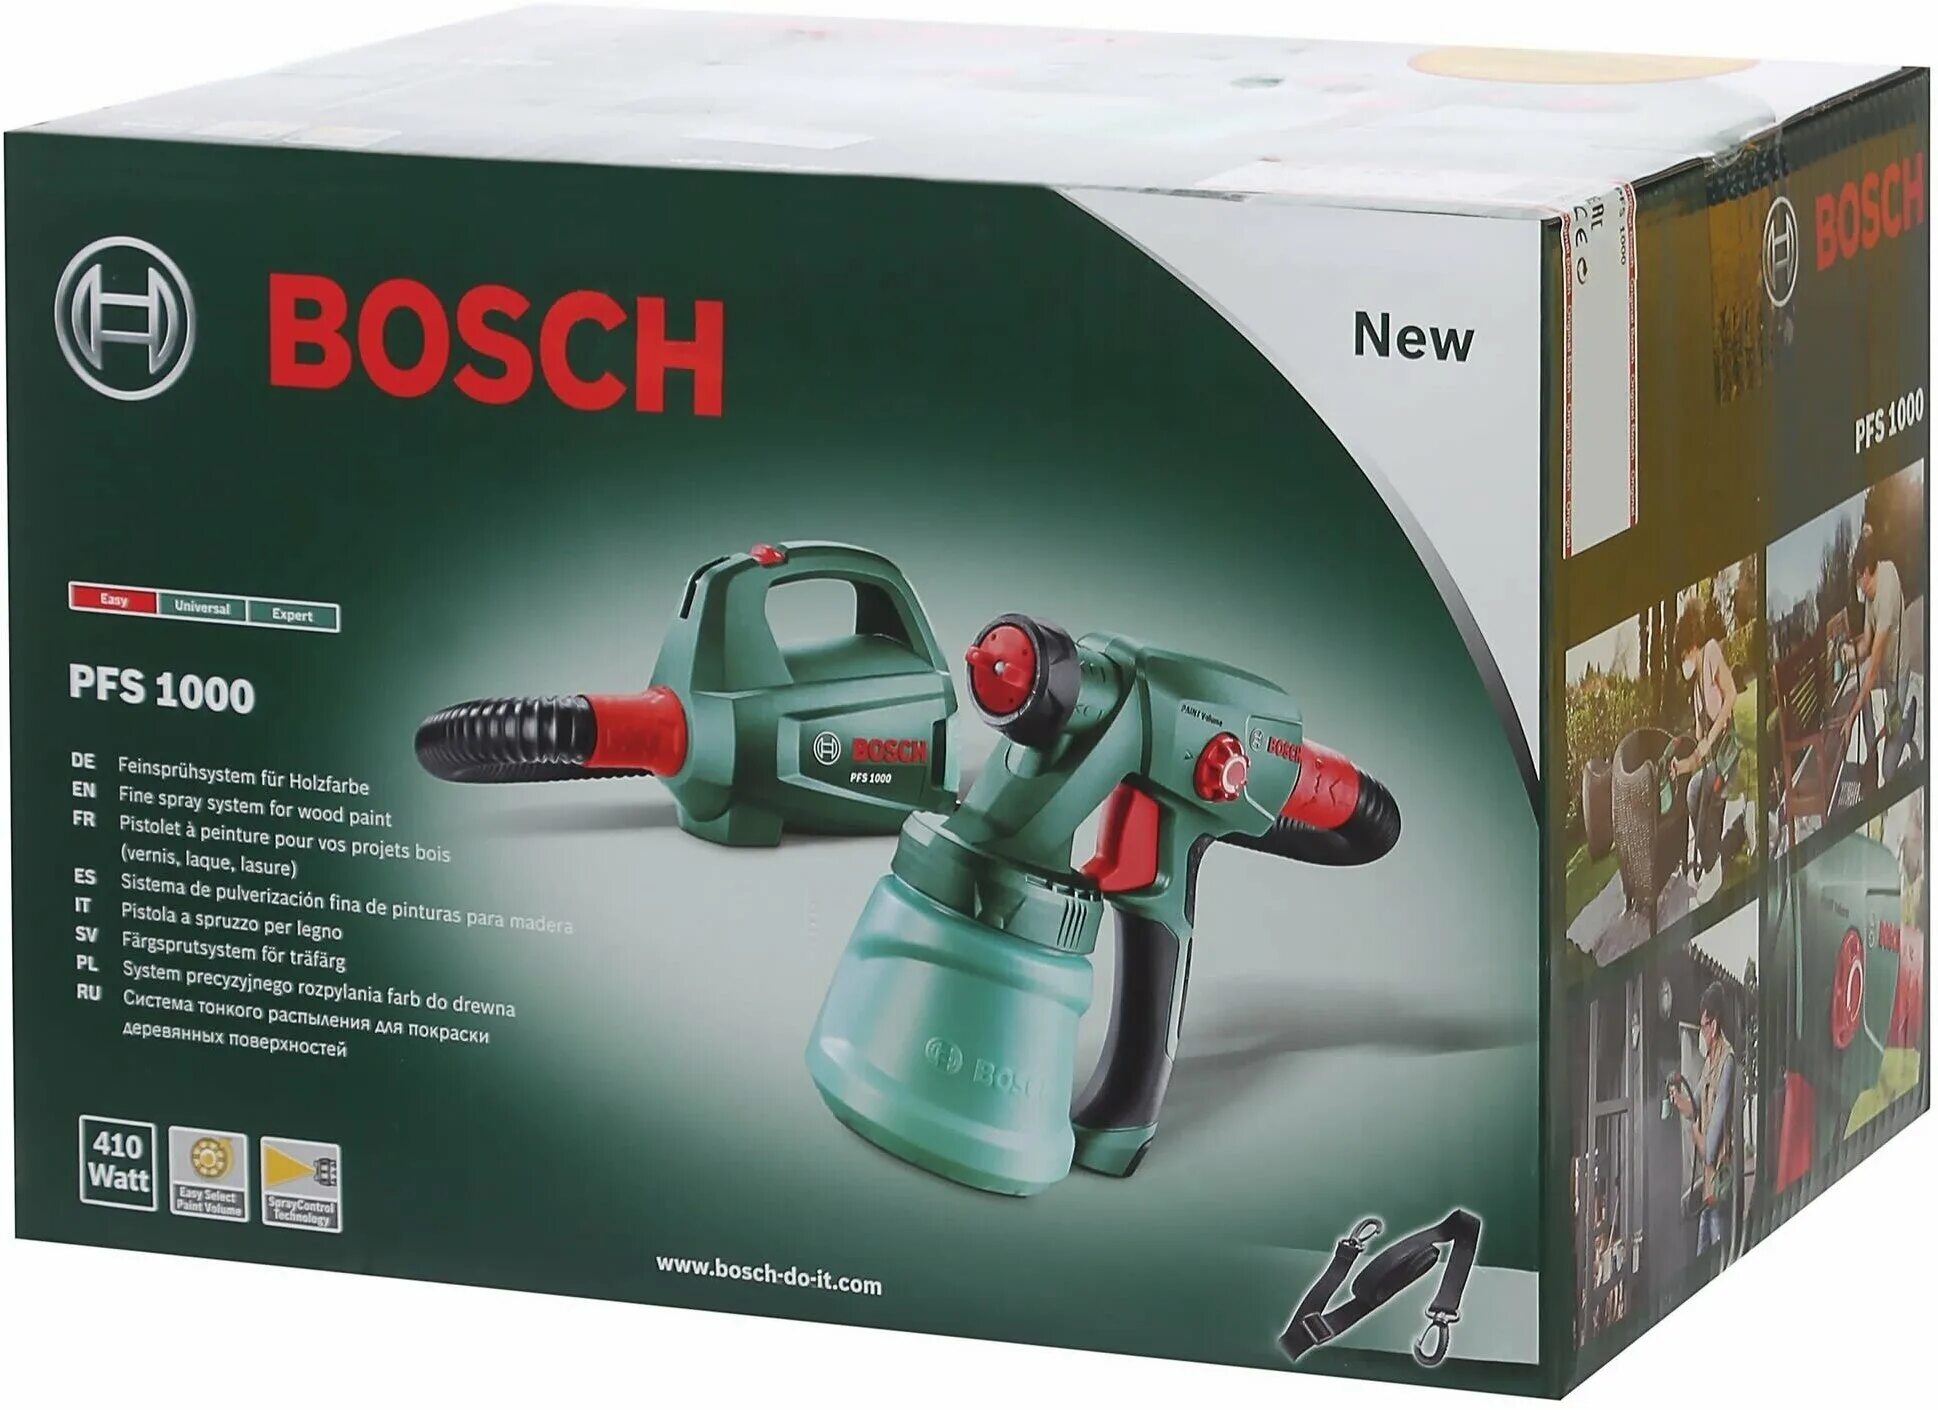 Купить bosch pfs. Краскопульт бош PFS 1000. Краскопульт Bosch PFS 1000, 420 Вт, 100 мл/мин. Краскопульт Bosch 12в. Краскопульта 420вт 100мл/мин PFS 1000.